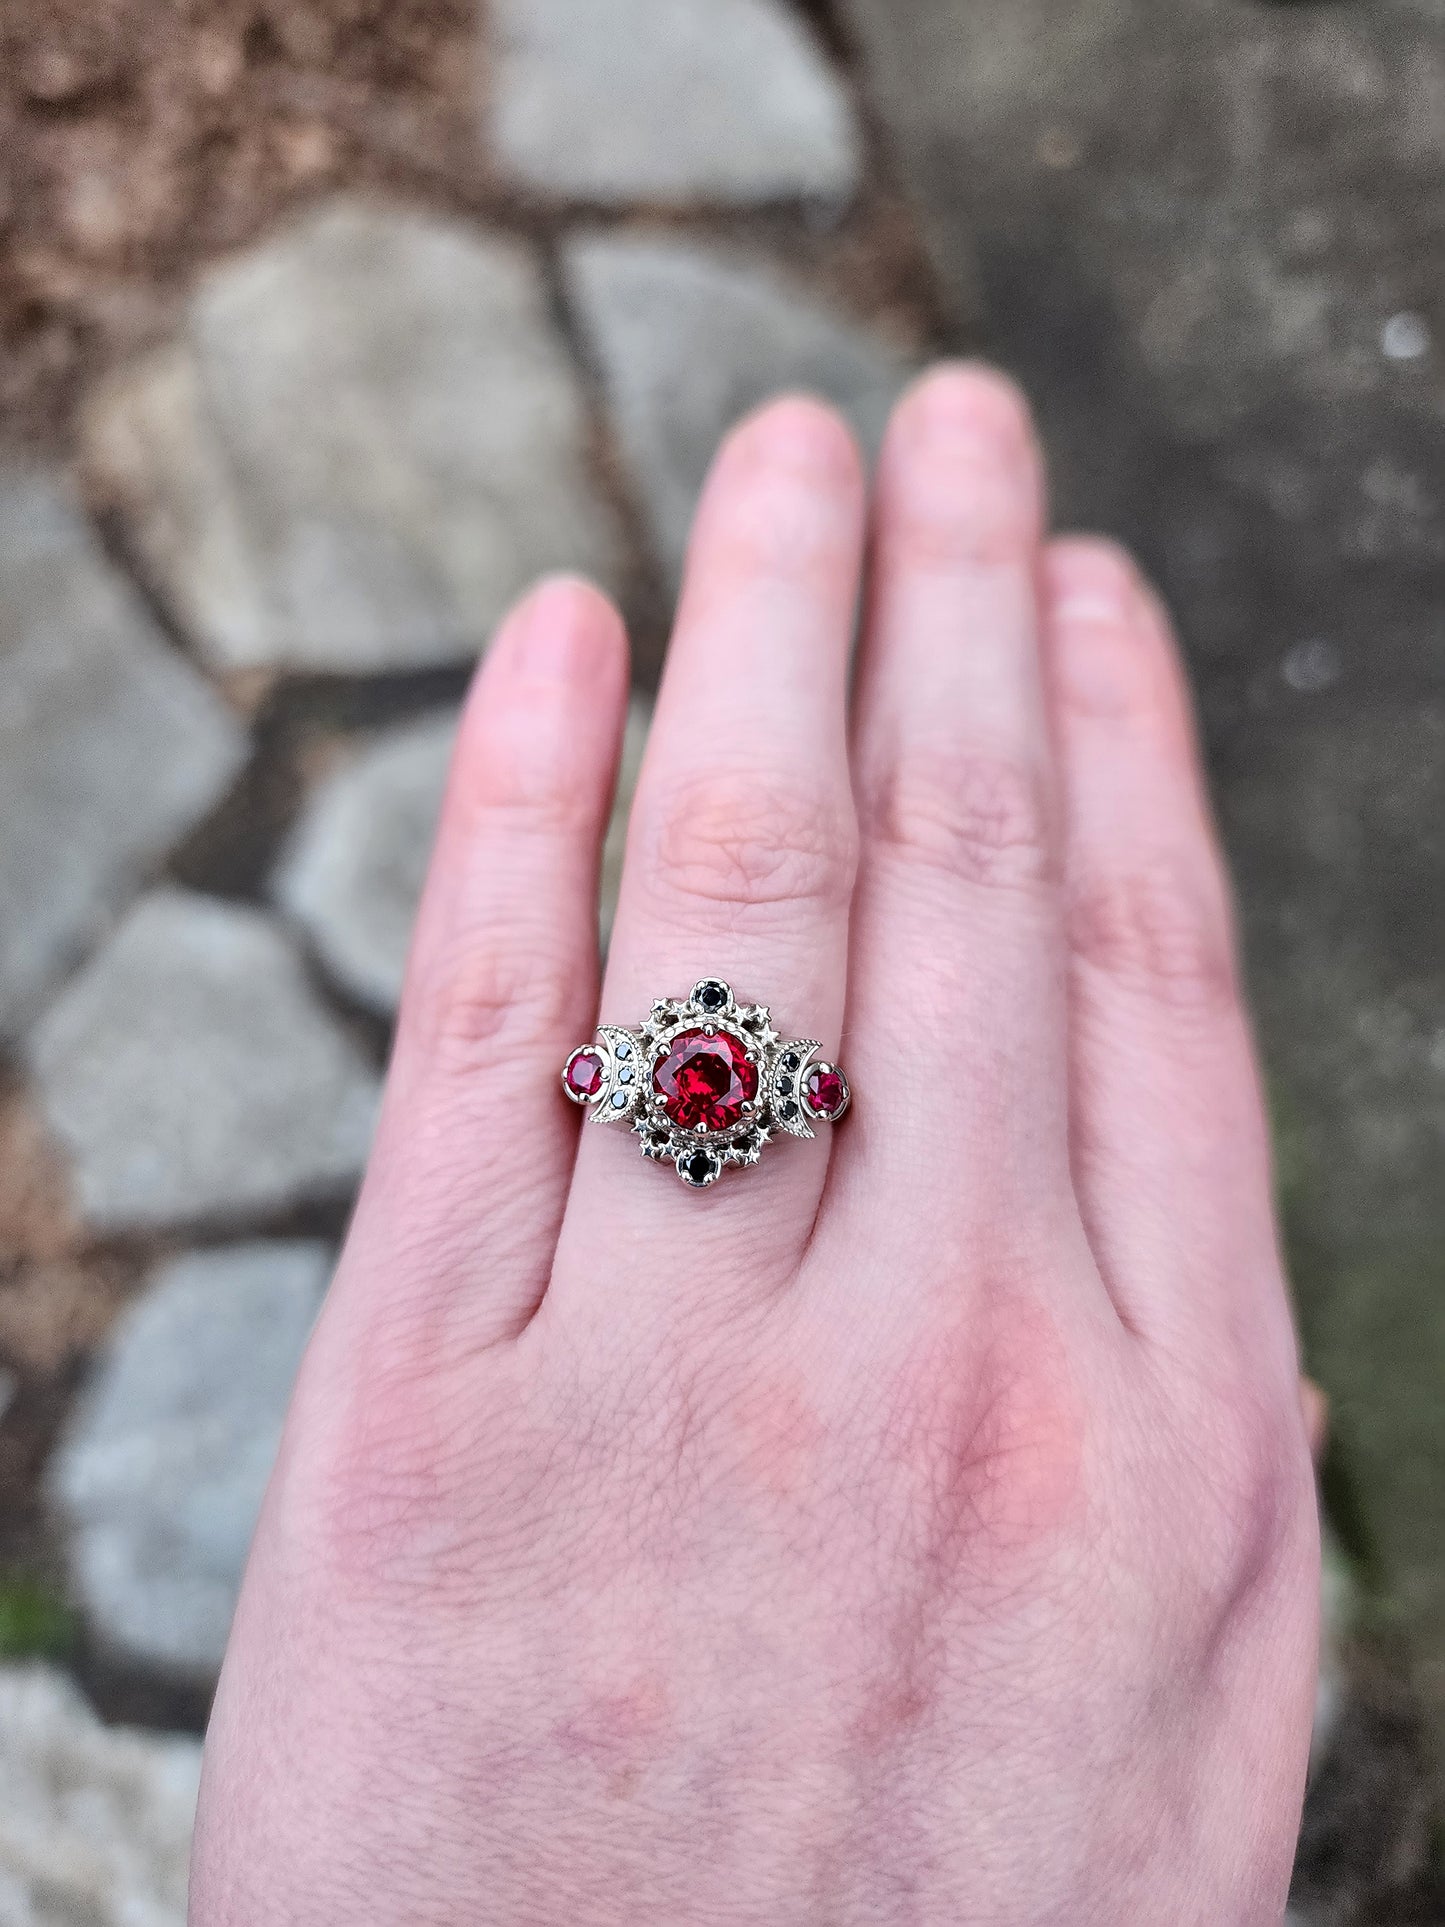 Blood Moon Chatham Ruby Engagement Ring with Black Diamonds Cosmos Gothic Triple Moon Wedding Ring - 14k Palladium Gold